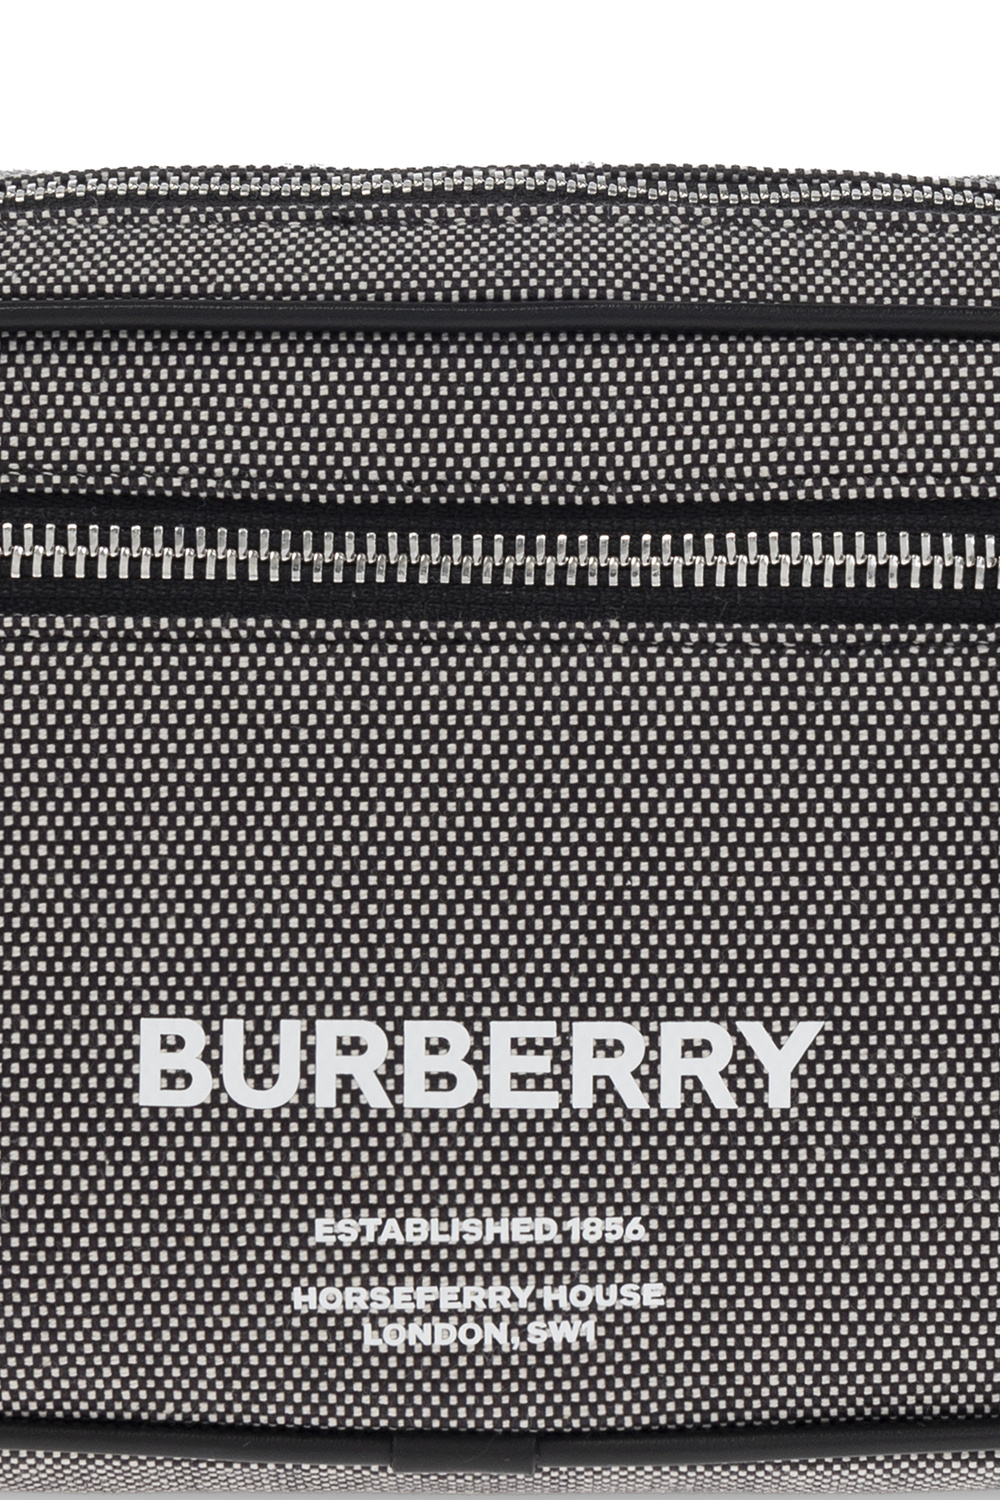 burberry Location-print ‘West’ belt bag